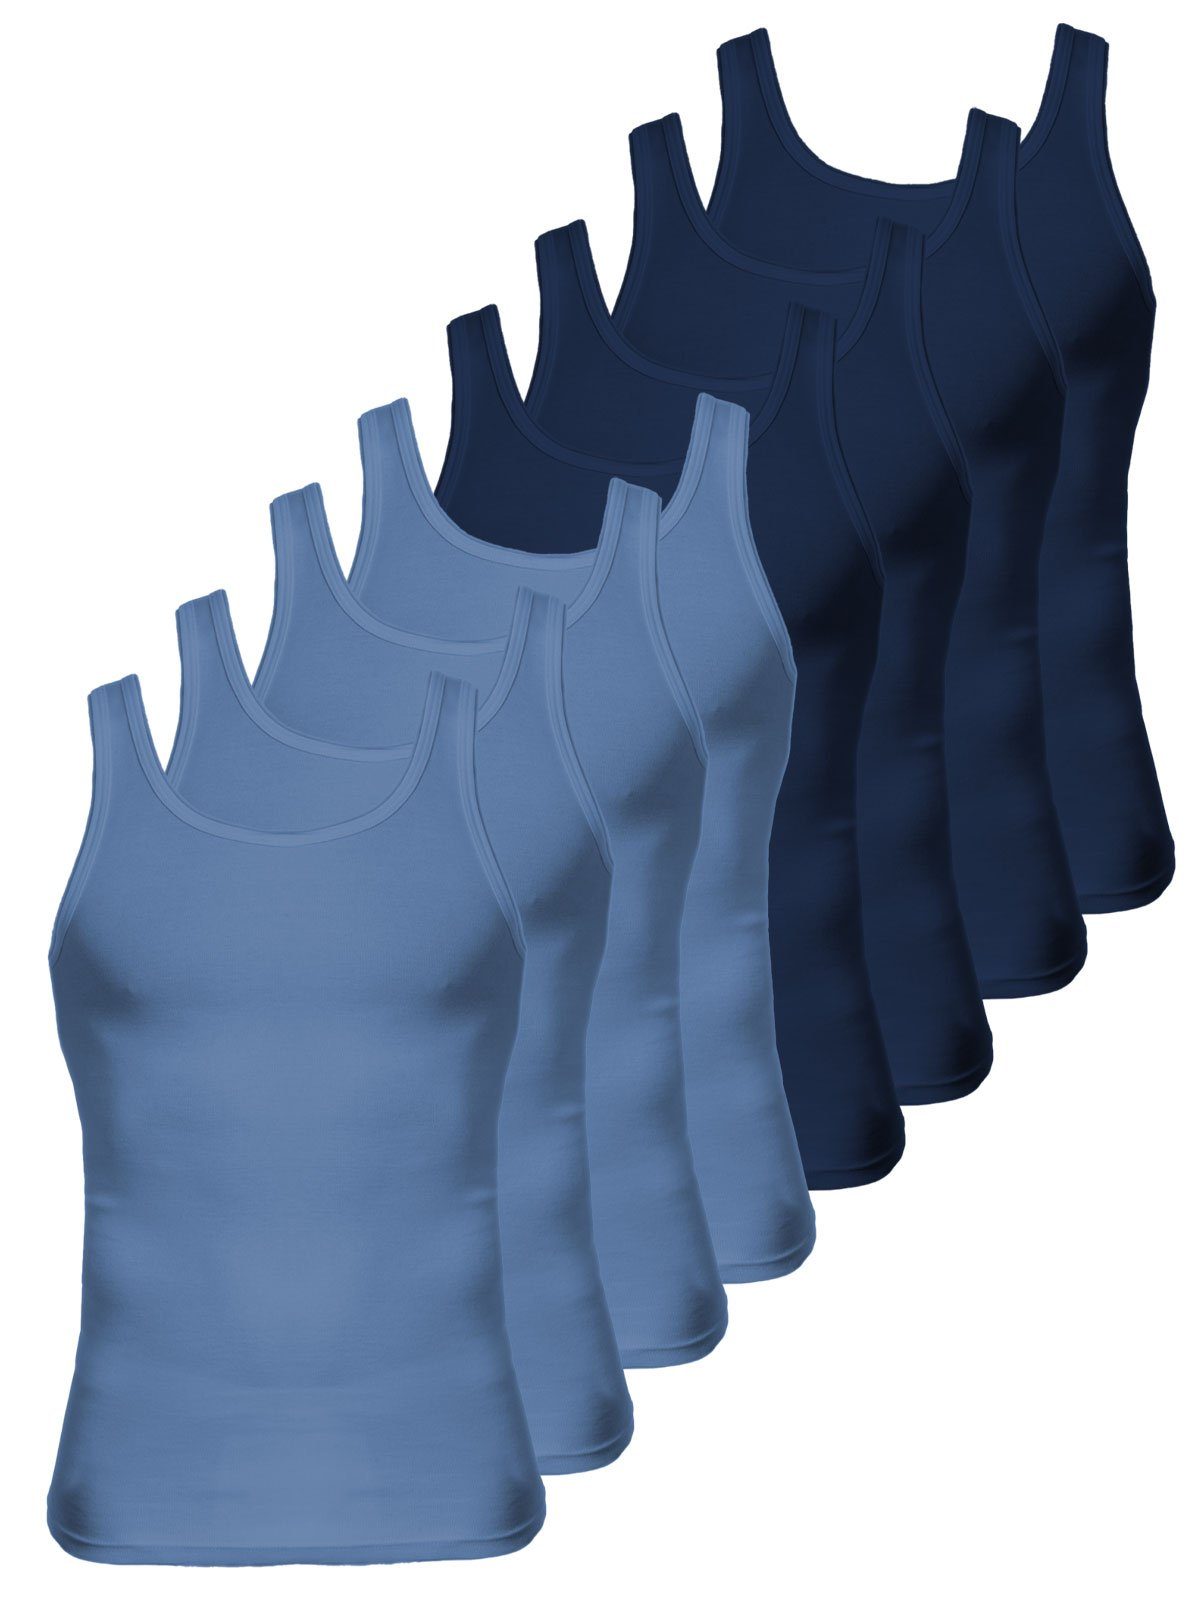 KUMPF Achselhemd 8er Sparpack Herren Unterhemd Bio Cotton (Spar-Set, 8-St) - navy atlantis